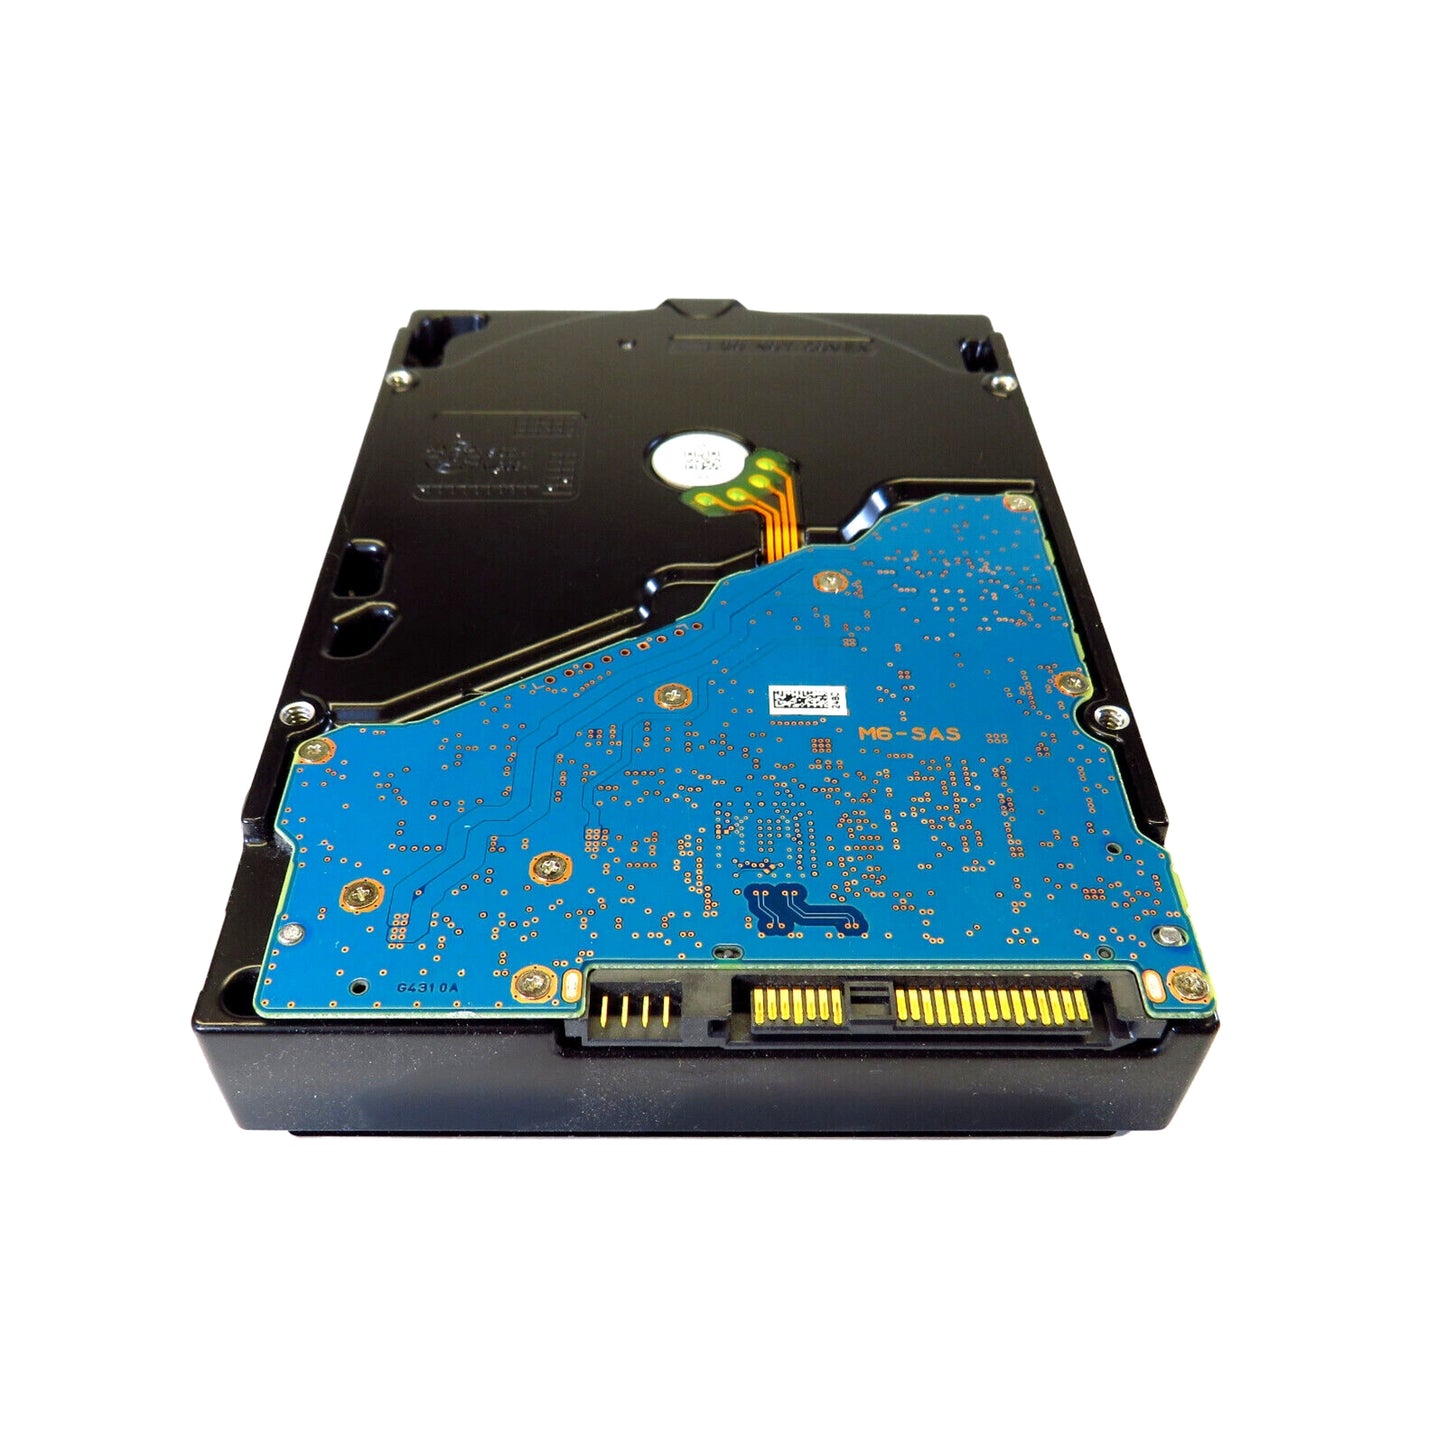 Dell XXPPV 3.5" 6TB 7200RPM SAS 12Gb/s Hard Disk Drive (HDD), Silver (Refurbished)